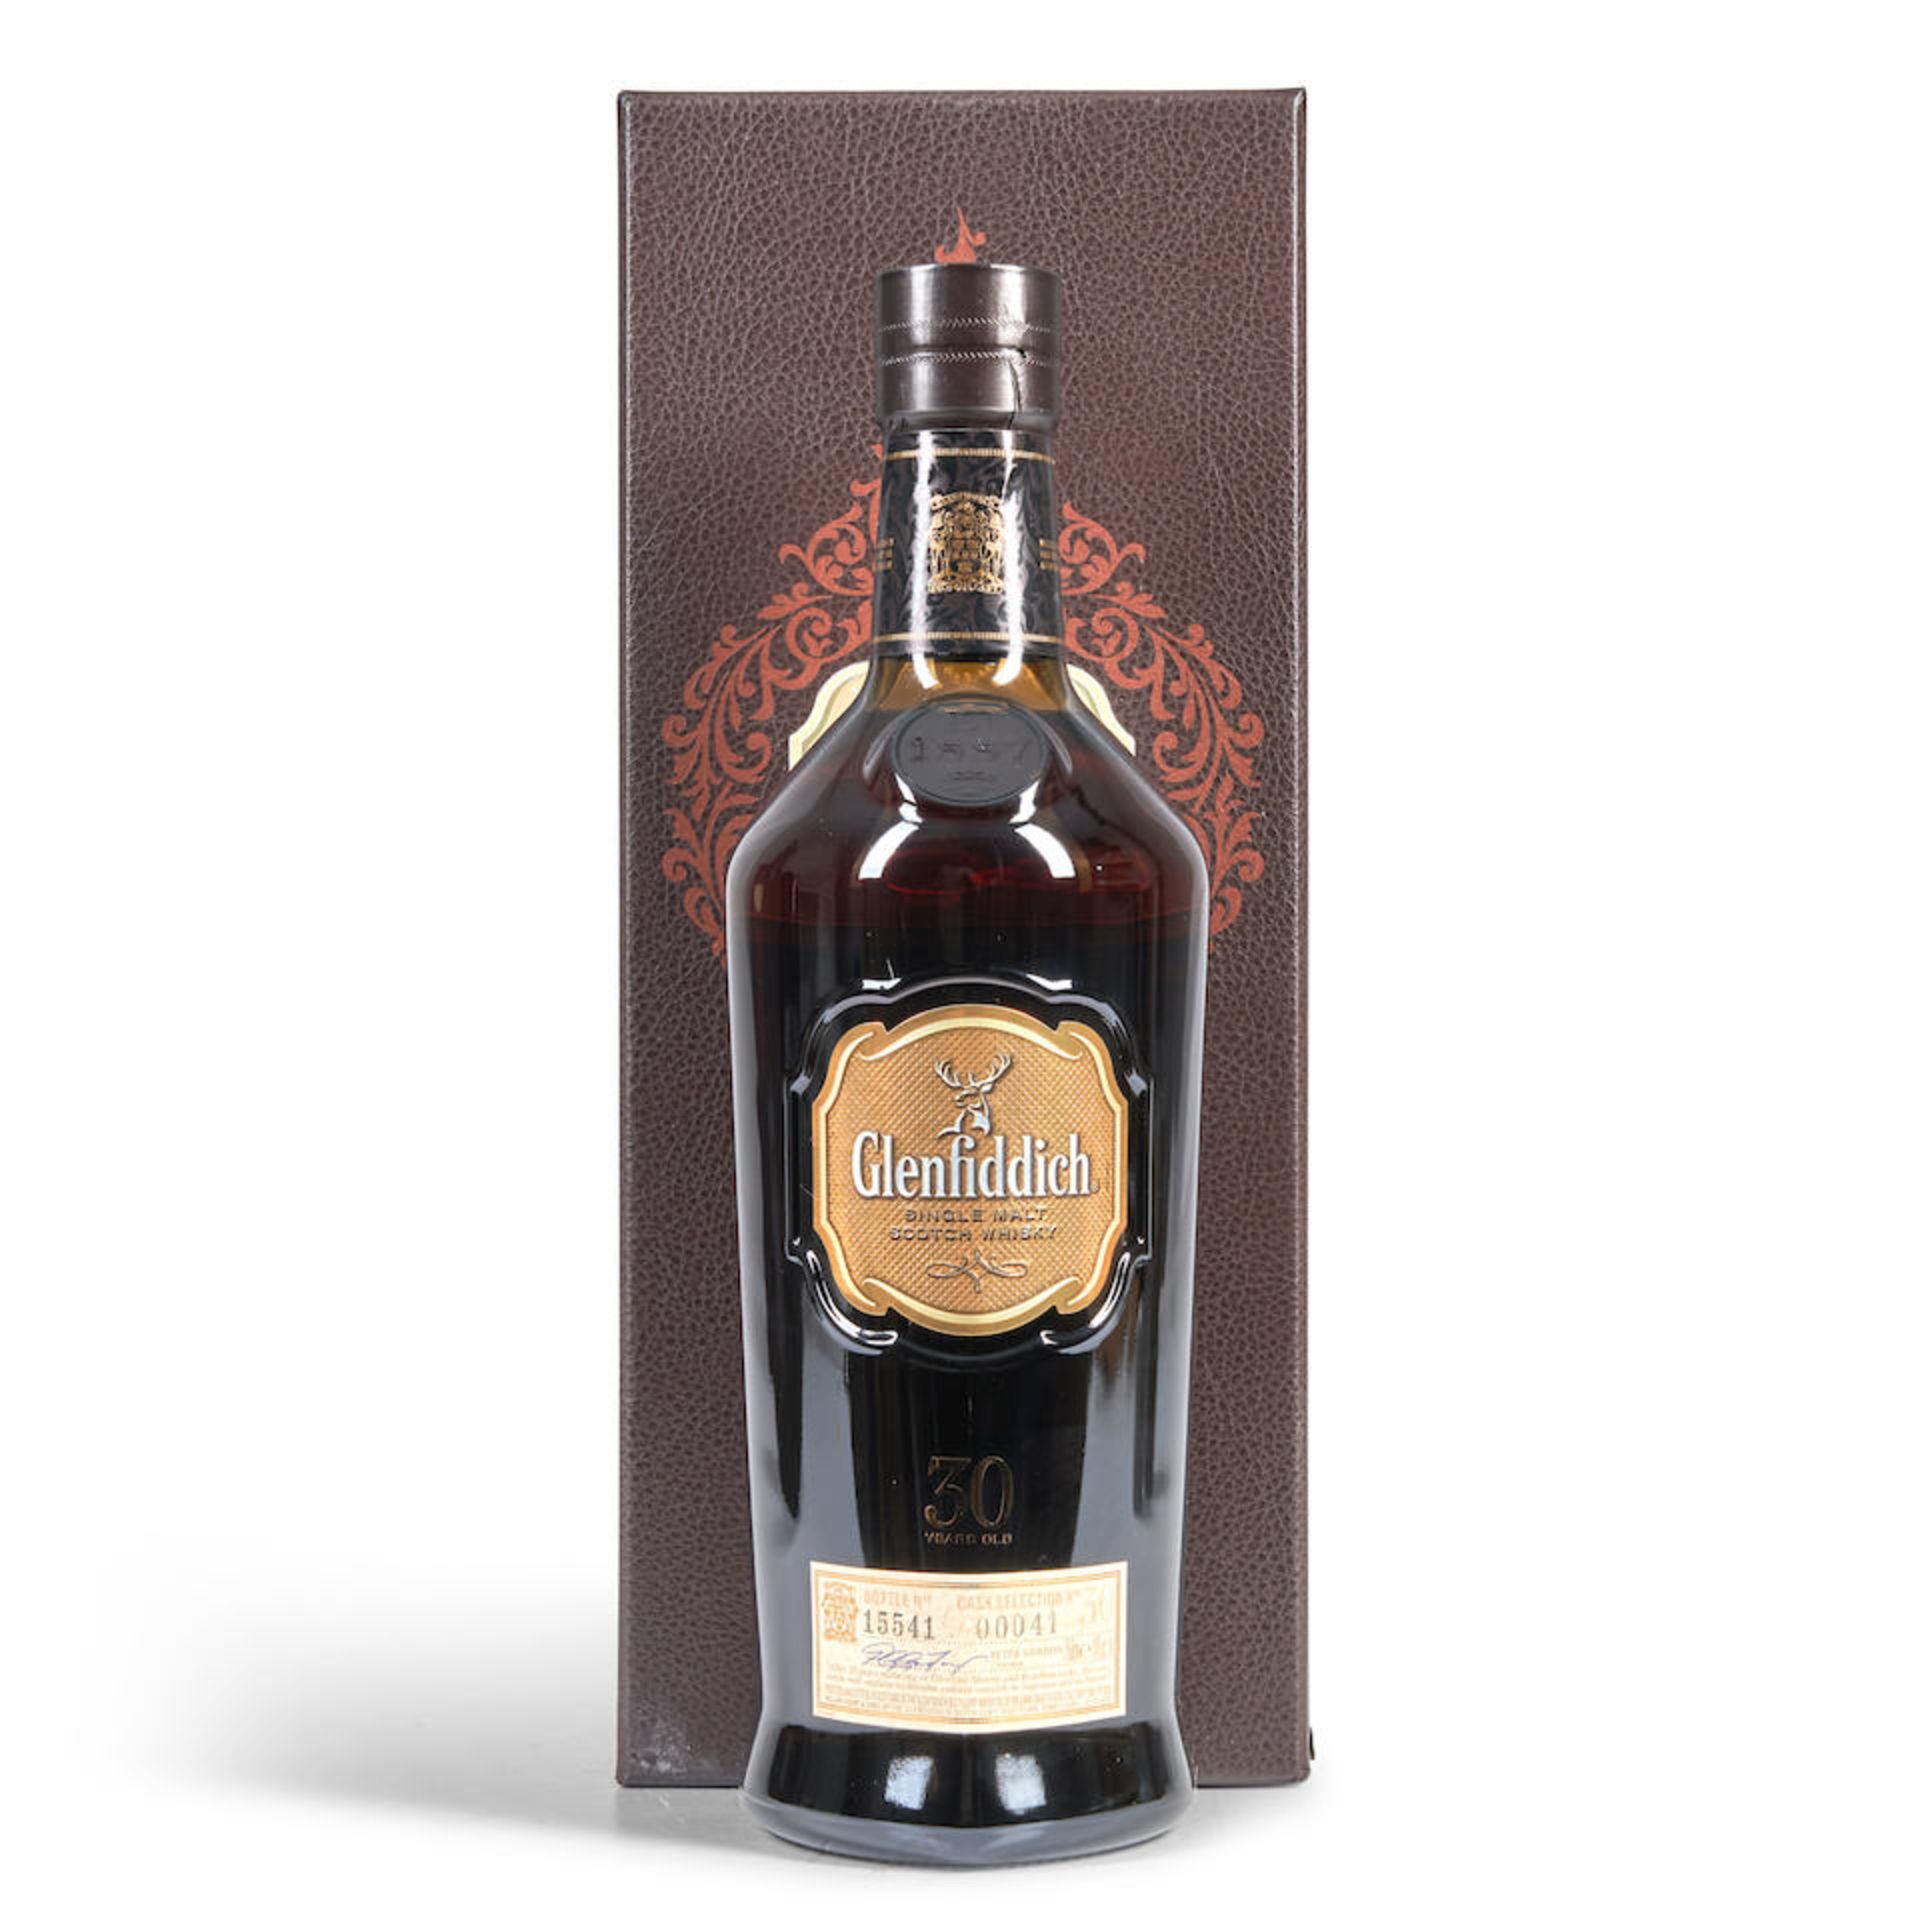 Glenfiddich 30 Years Old (1 750ml bottle)